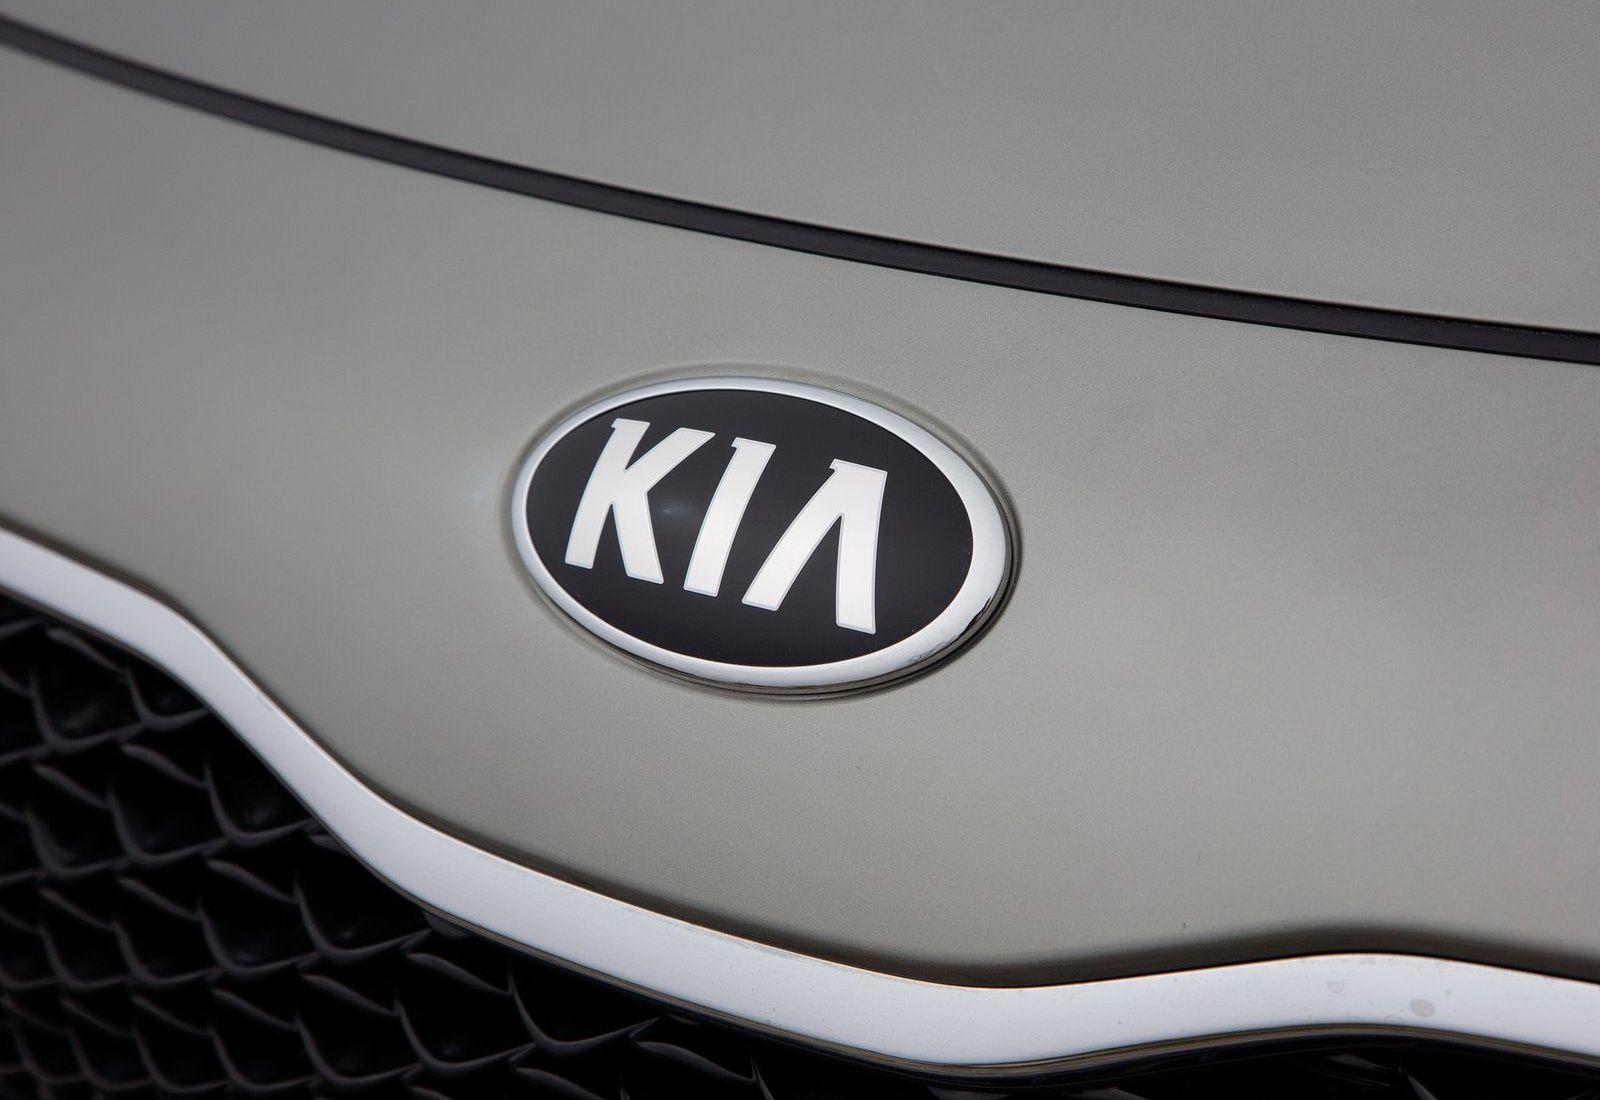 American Honda and Kia Car Company Logo - Kia Logo, Kia Car Symbol Meaning and History | Car Brand Names.com